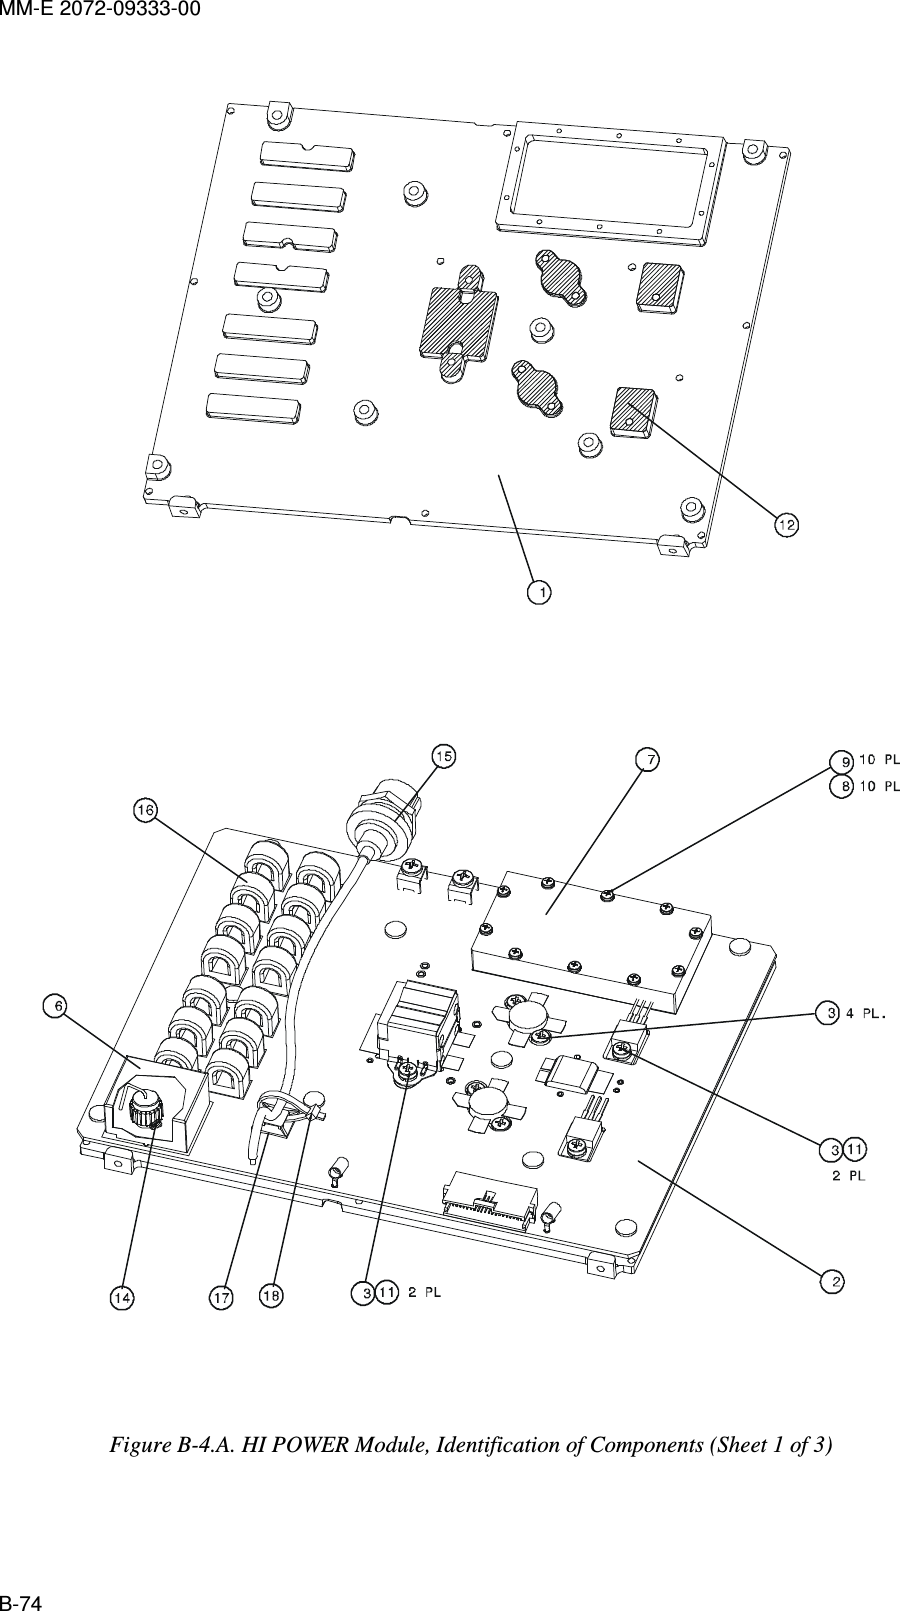 MM-E 2072-09333-00 B-74              Figure  B-4.A. HI POWER Module, Identification of Components (Sheet 1 of 3) 